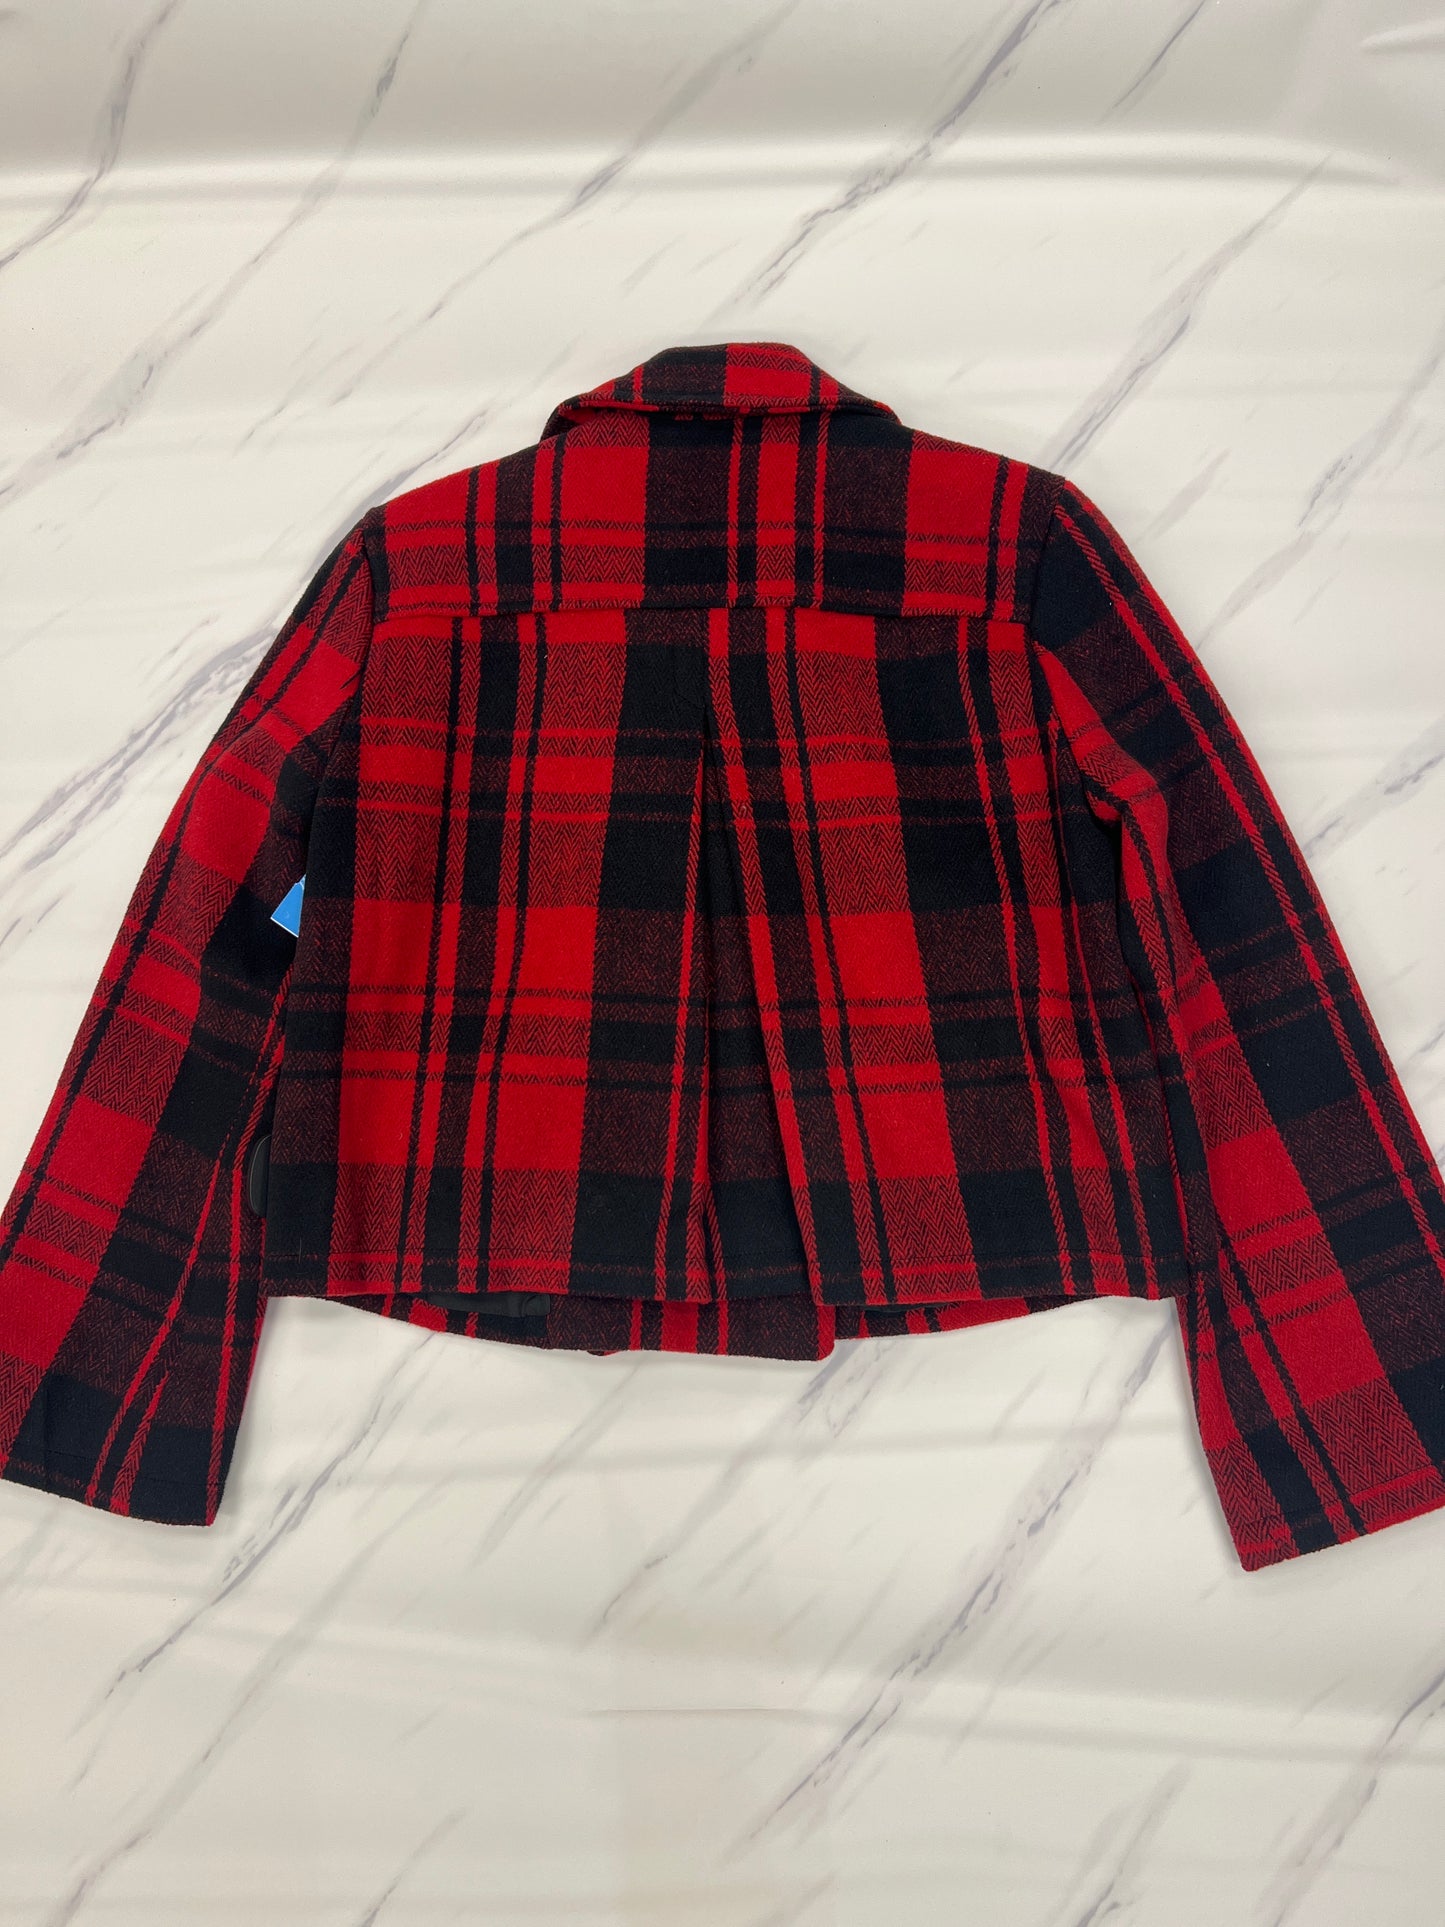 Jacket Fleece By Bb Dakota  Size: S